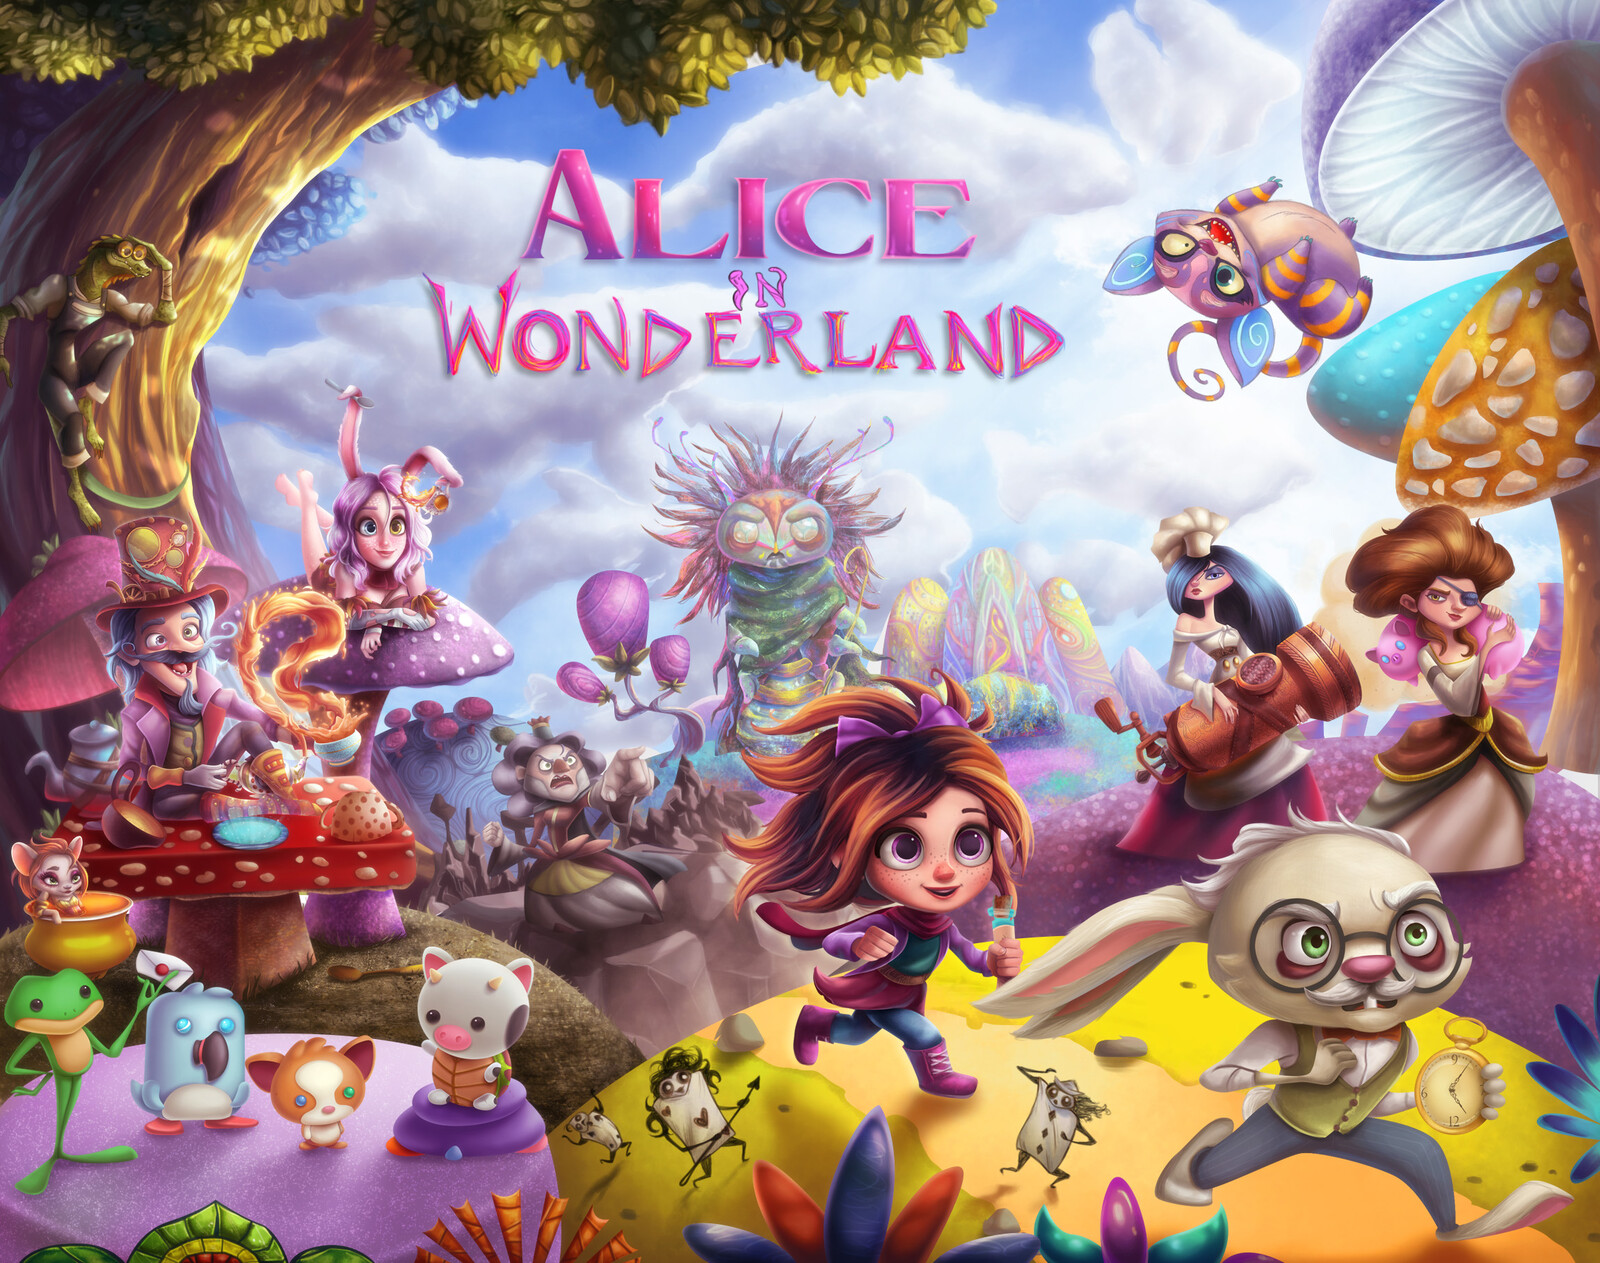 Alice in Wonderland book cover